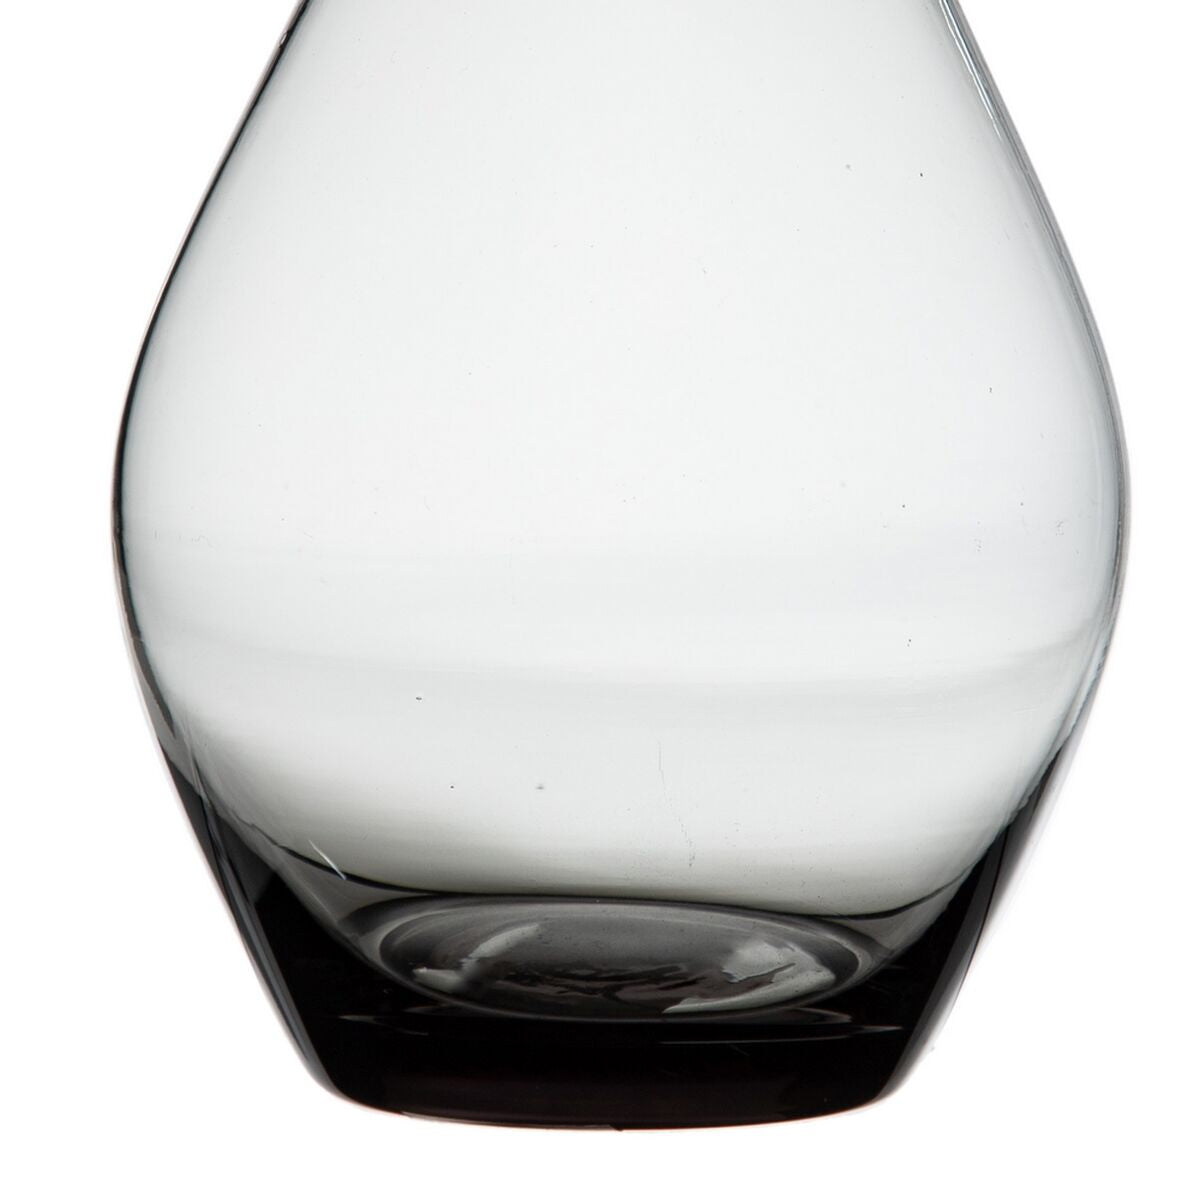 Vase Grey Glass 12 x 12 x 33 cm